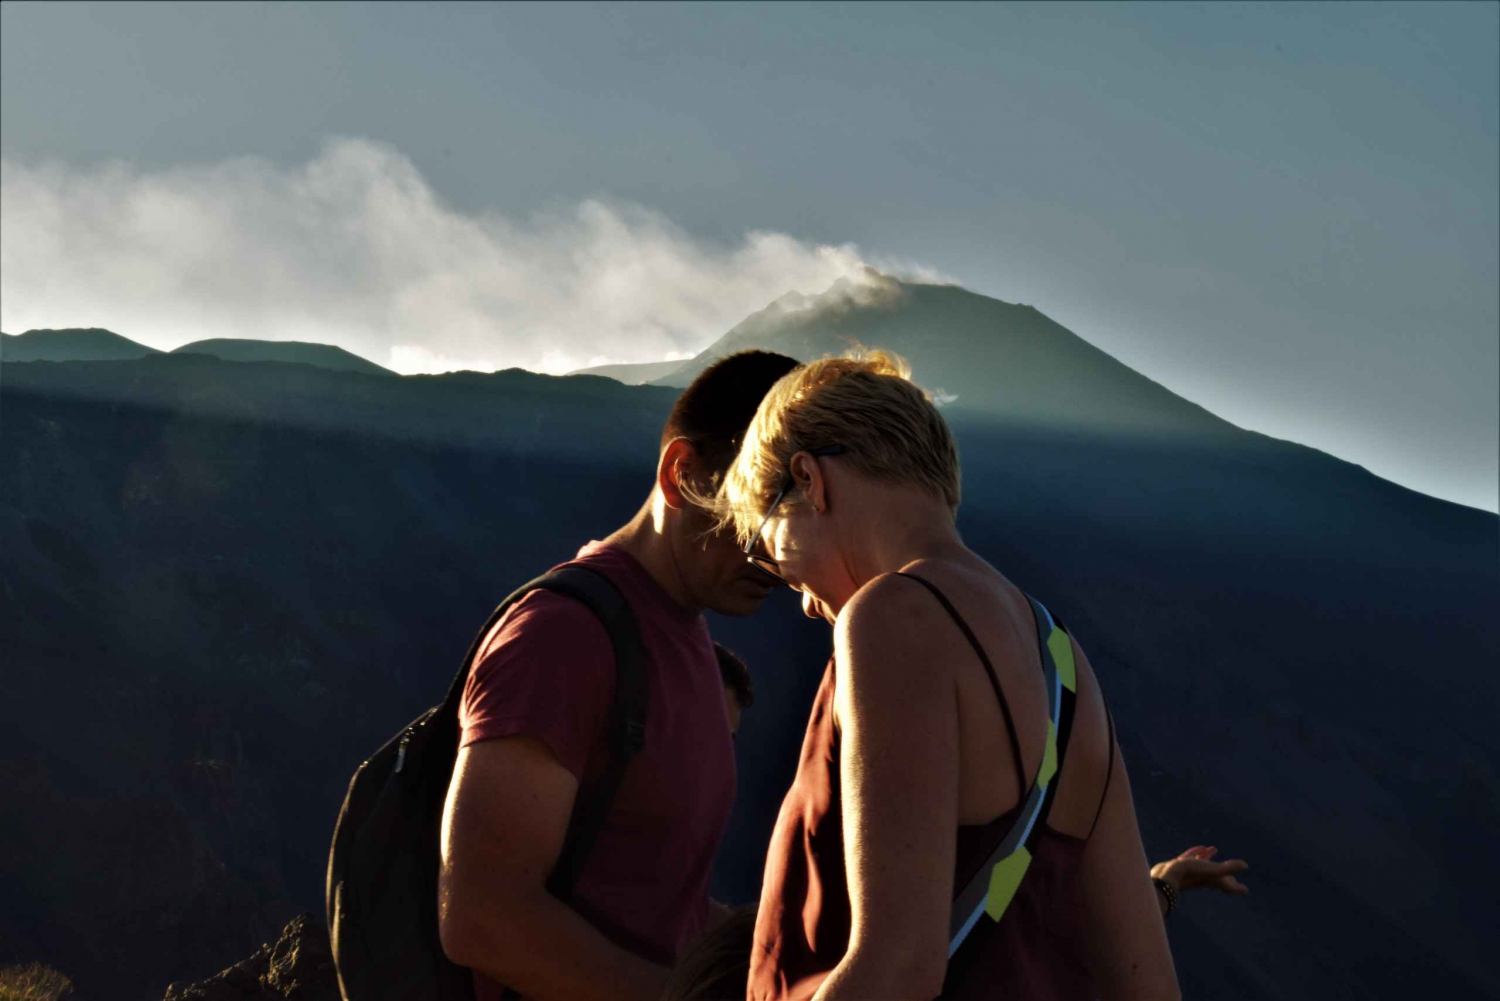 Mount Etna Excursion + Visit to the Lava Tubes